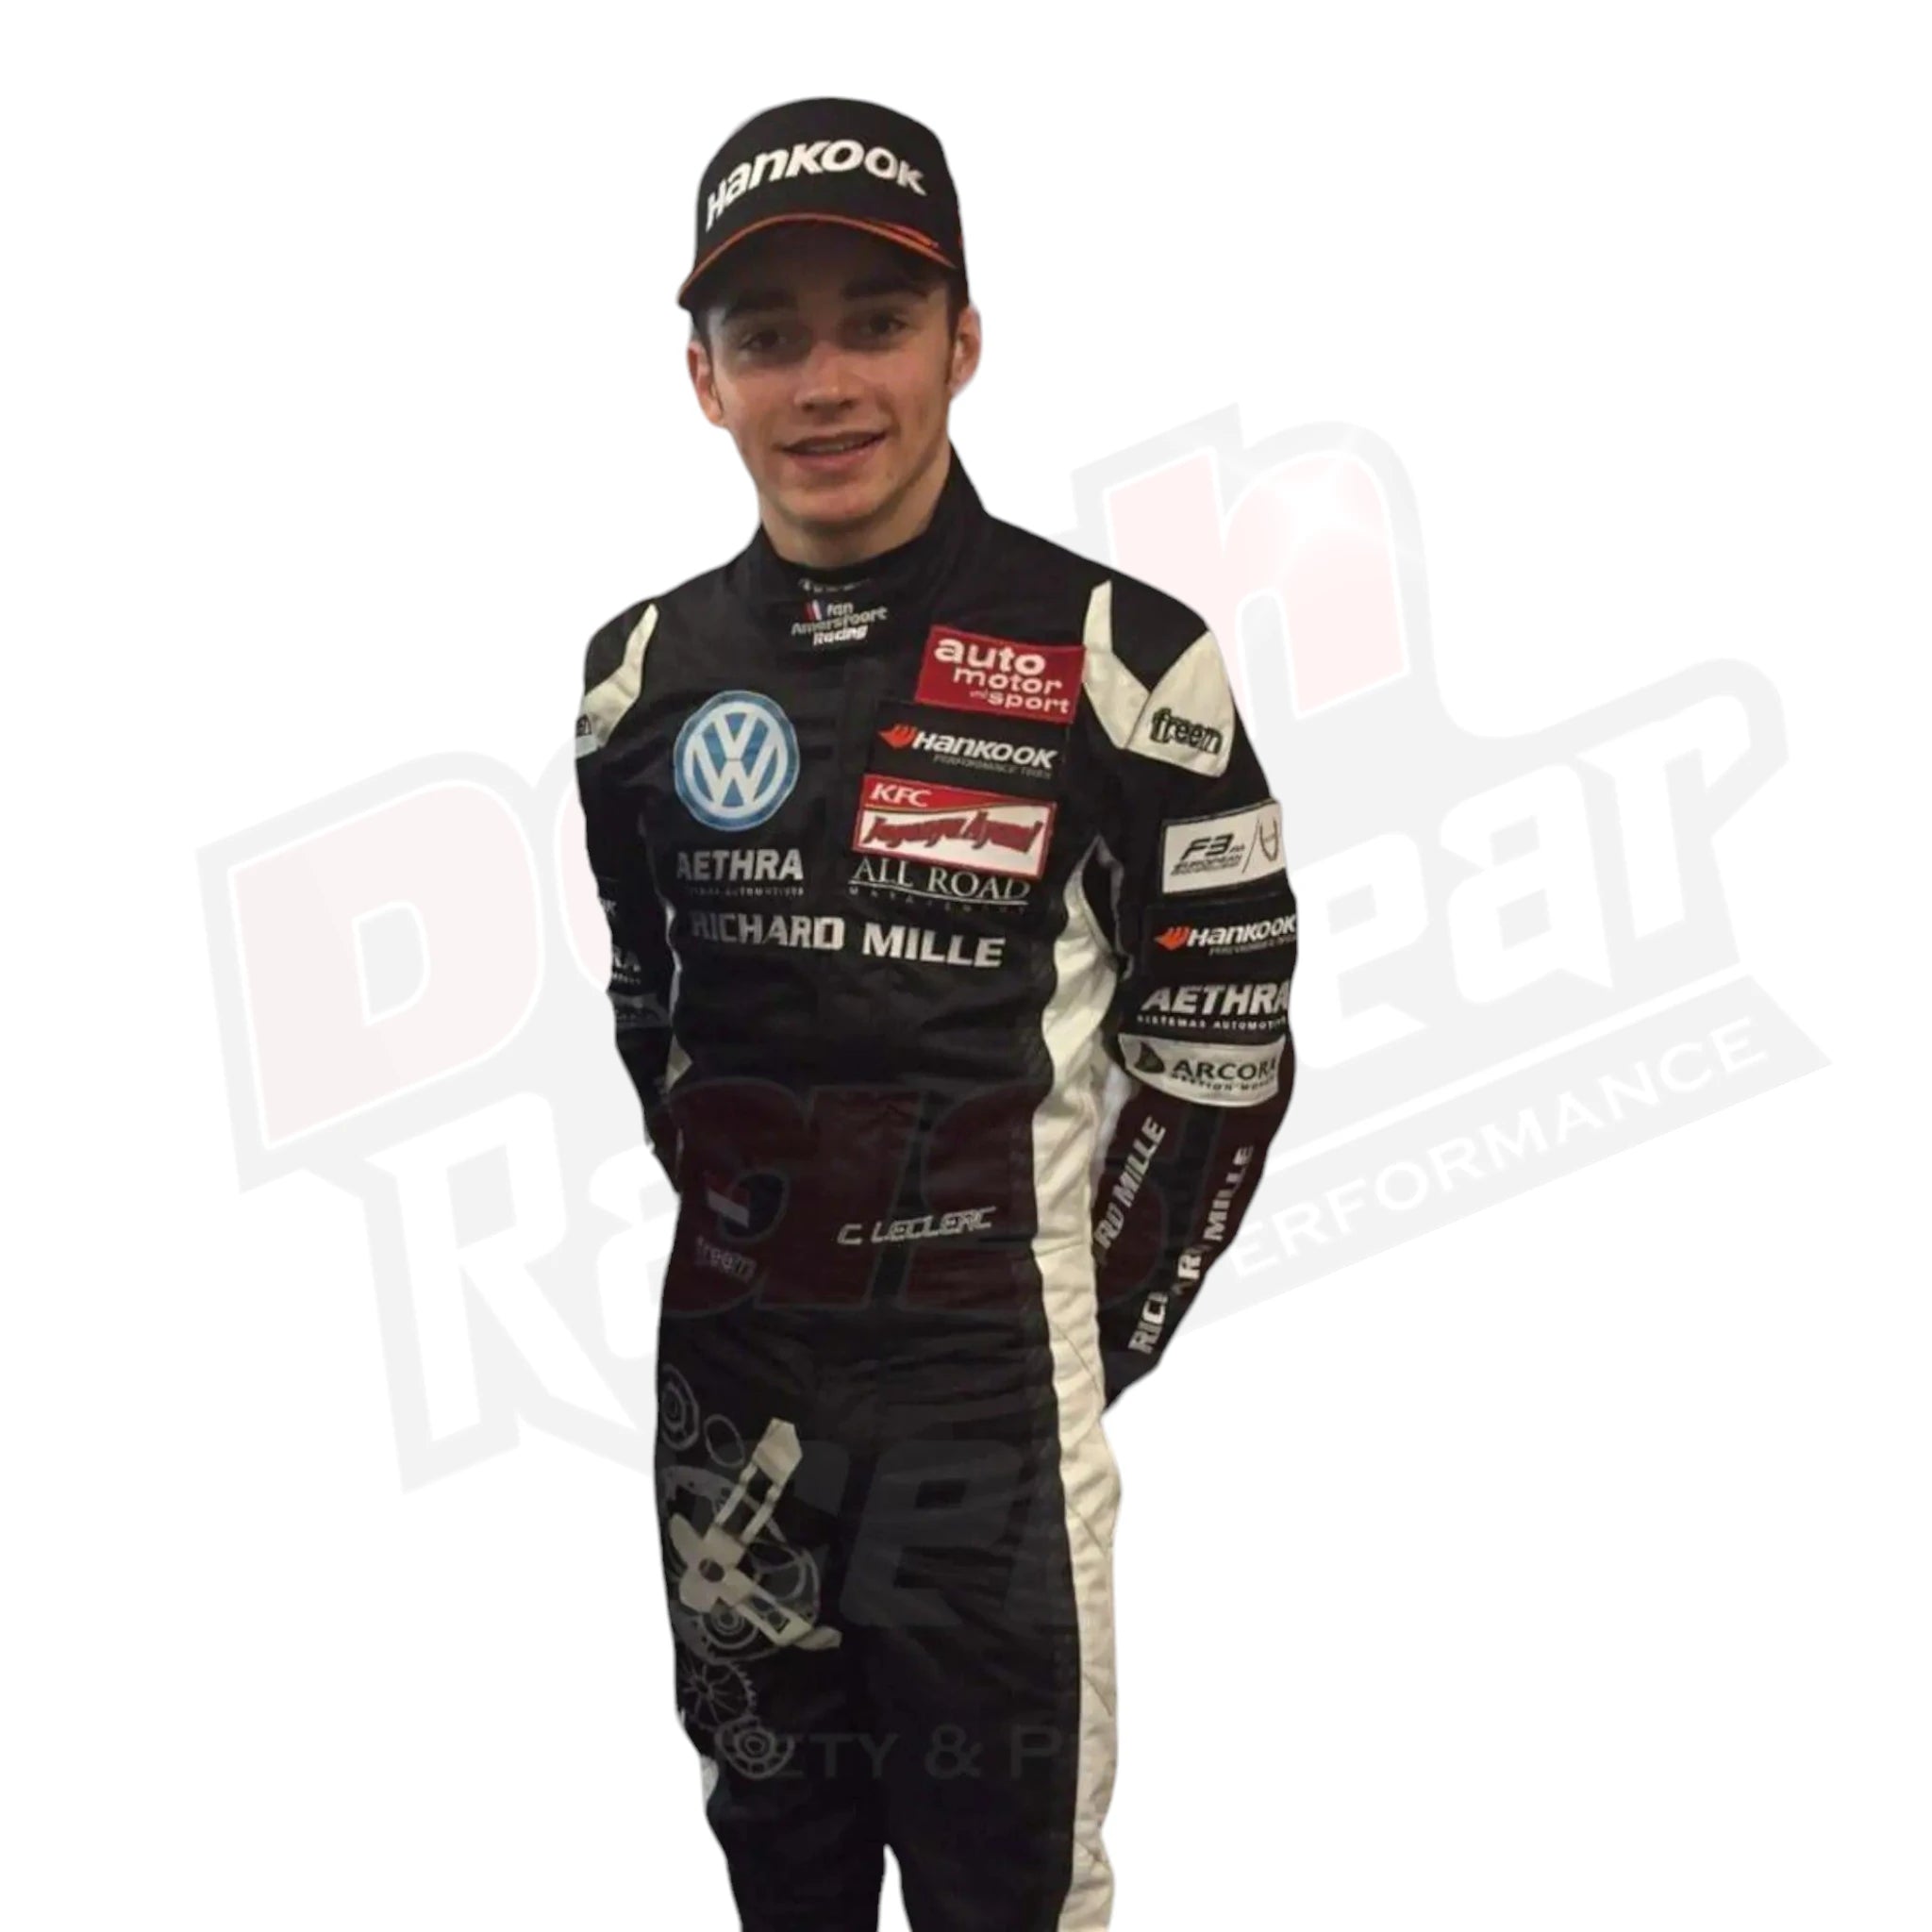 2015 Charles Leclerc Richard Mille F3 Race Suit - Silverstone